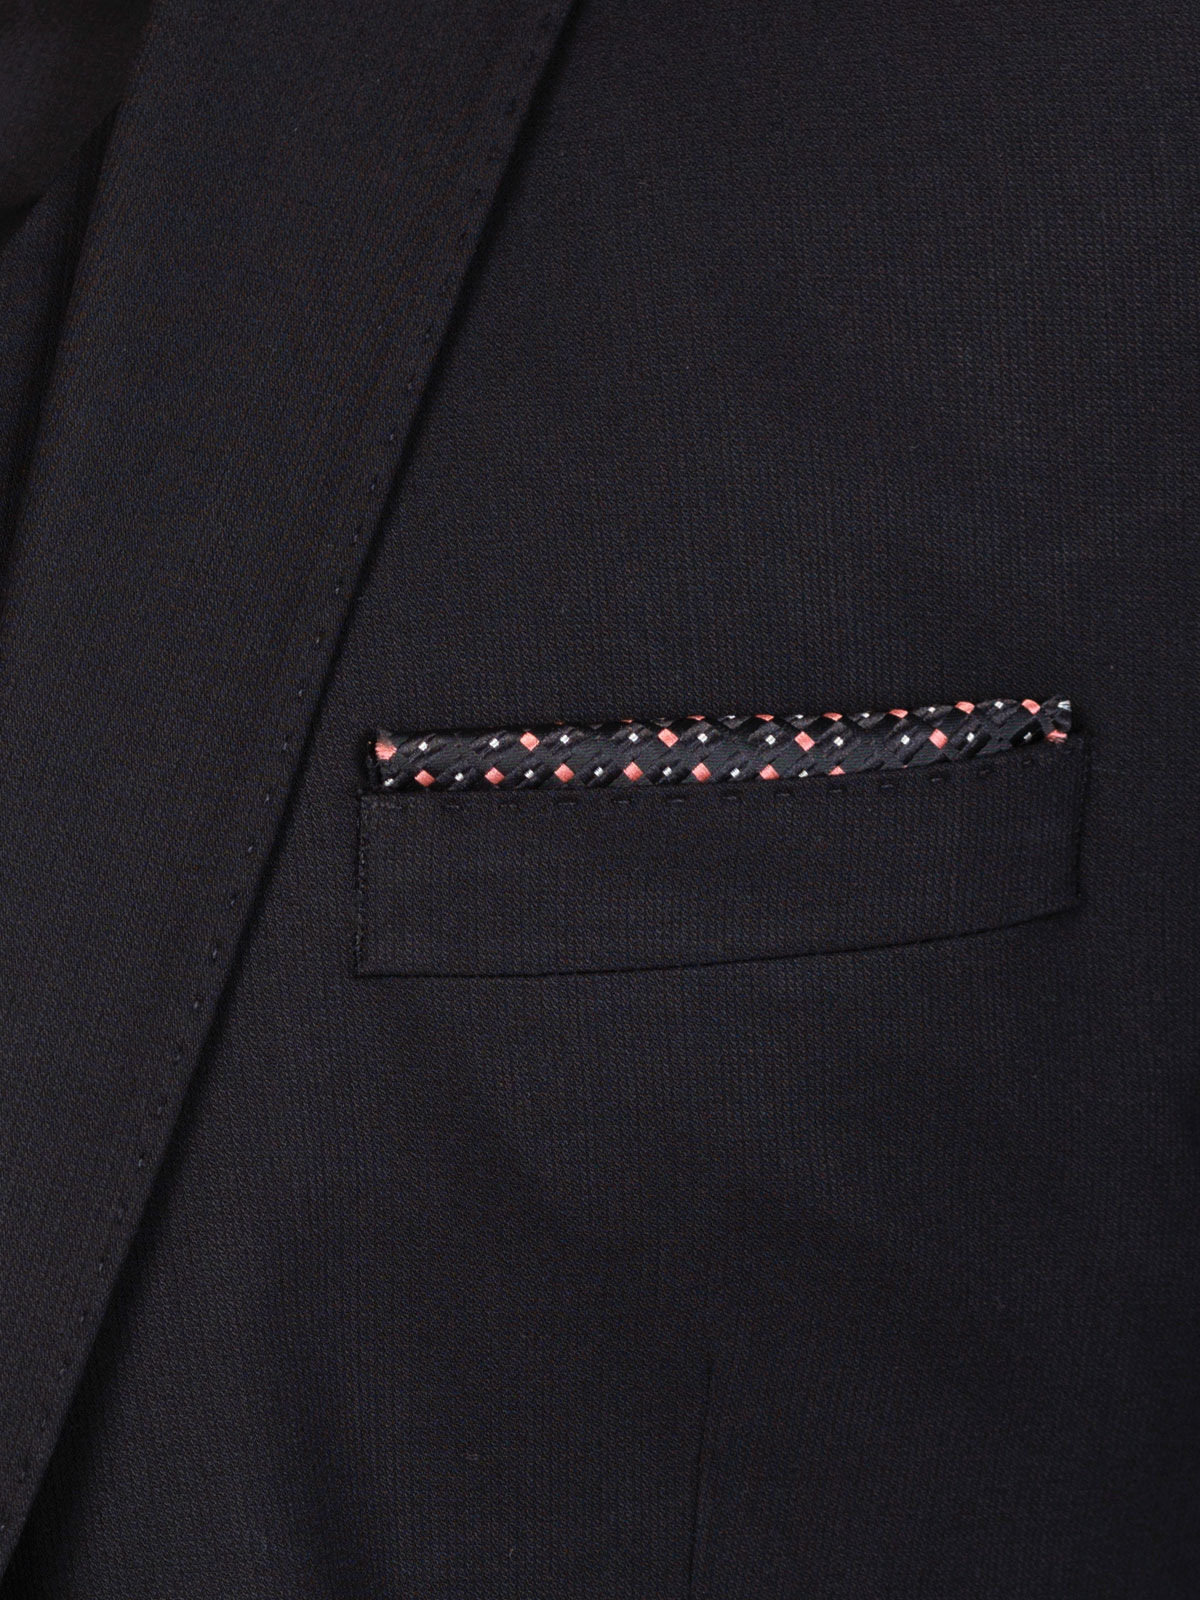 Jachetă neagră elegantă - 64120 € 141.73 img3